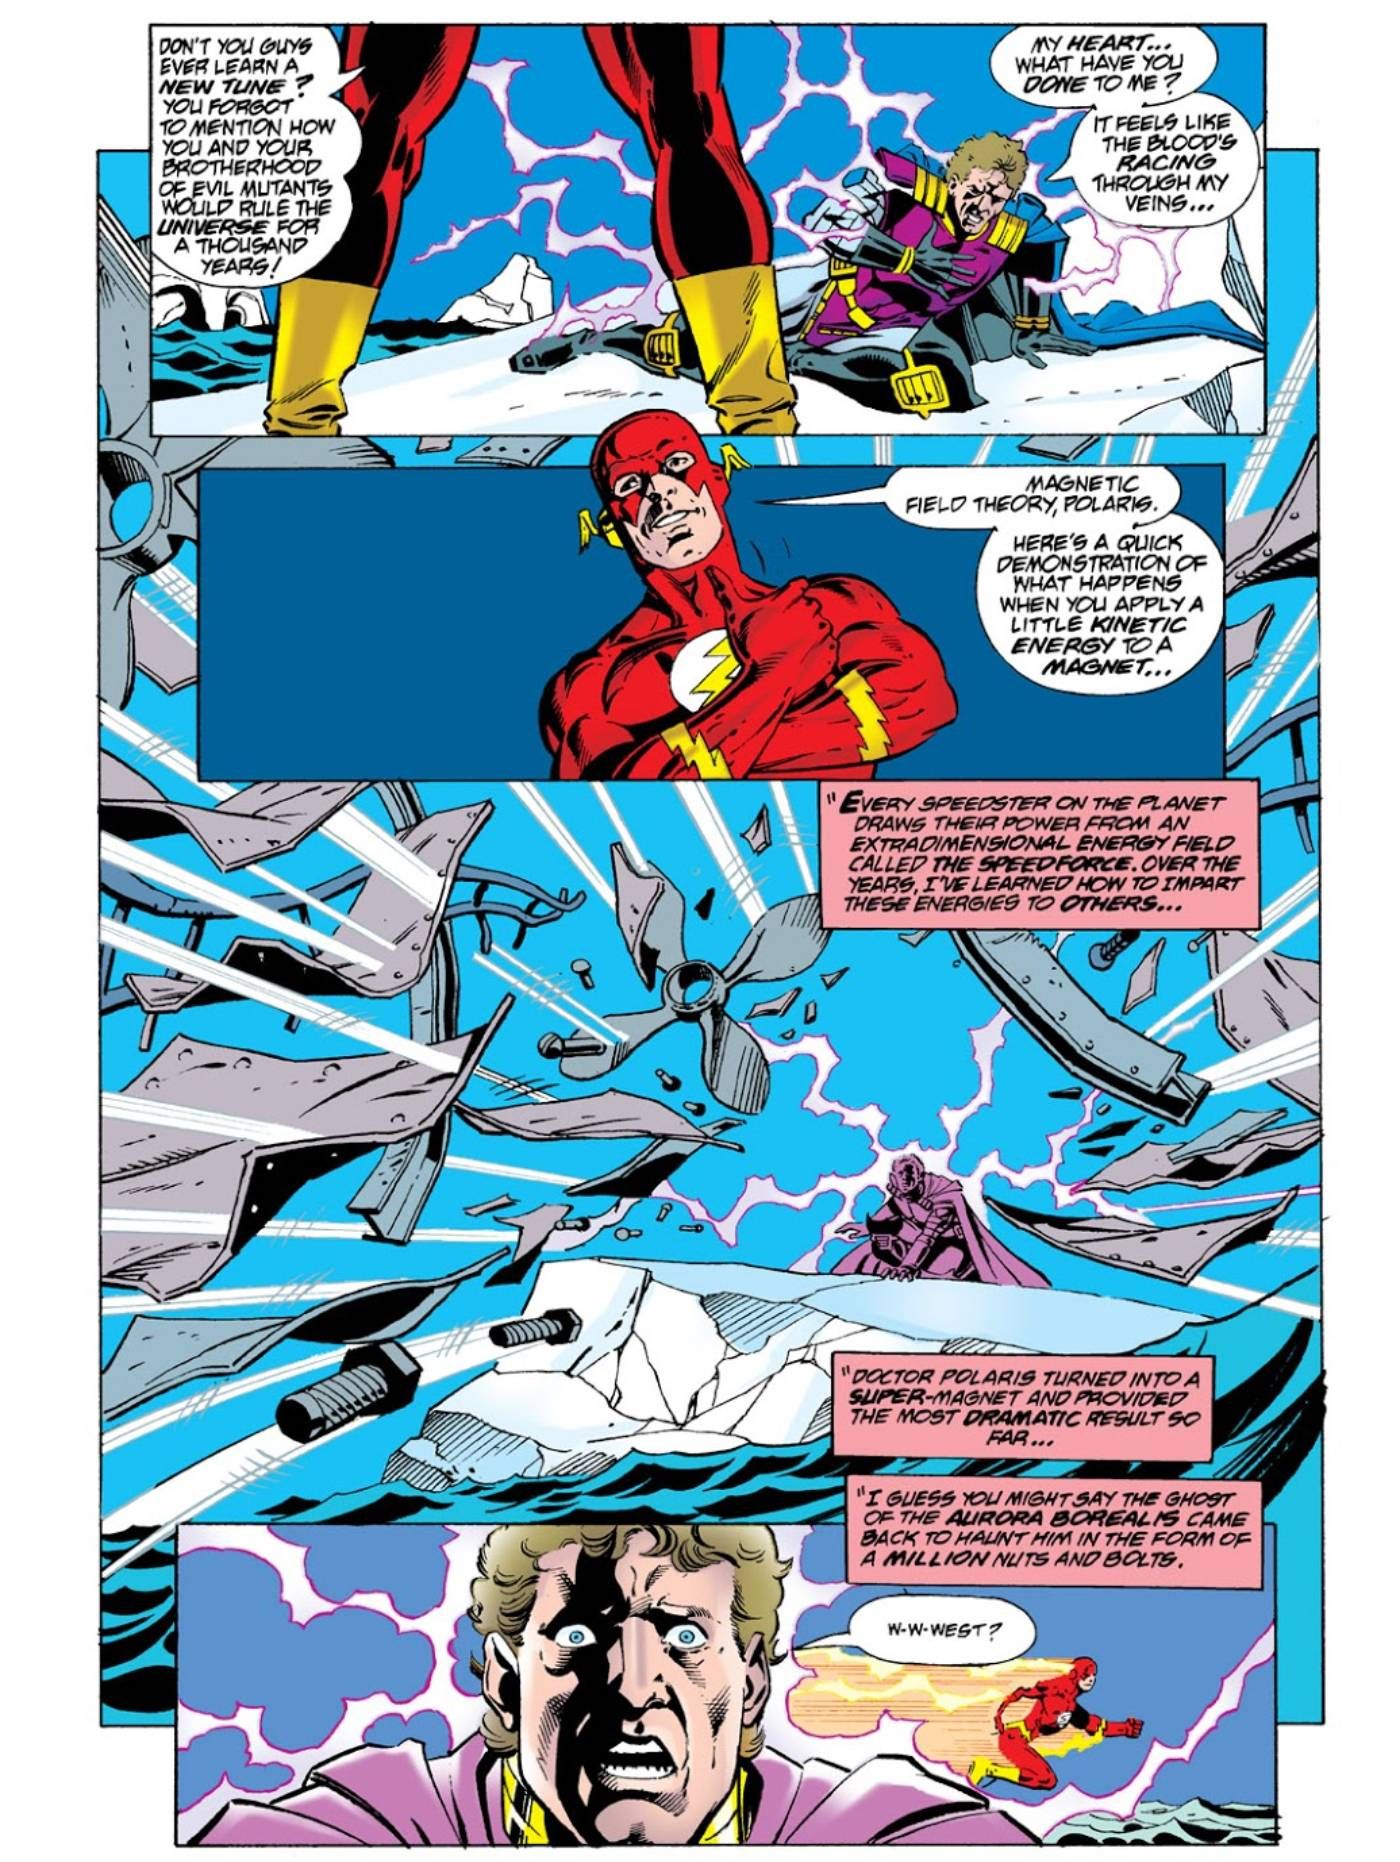 The Flash fights Polaris